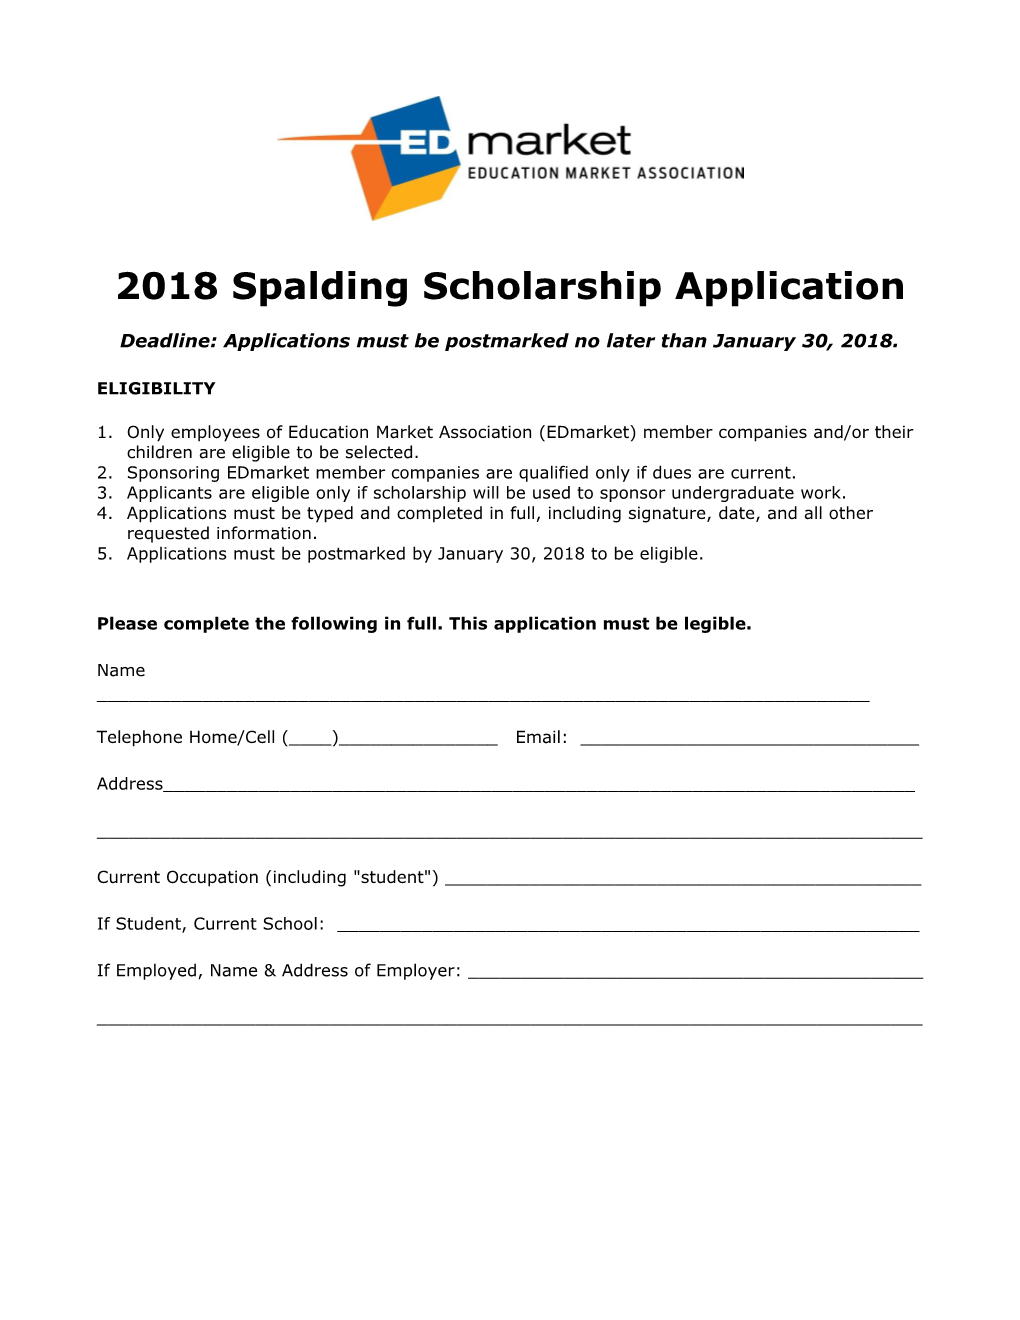 2003 Spalding Scholarship Application